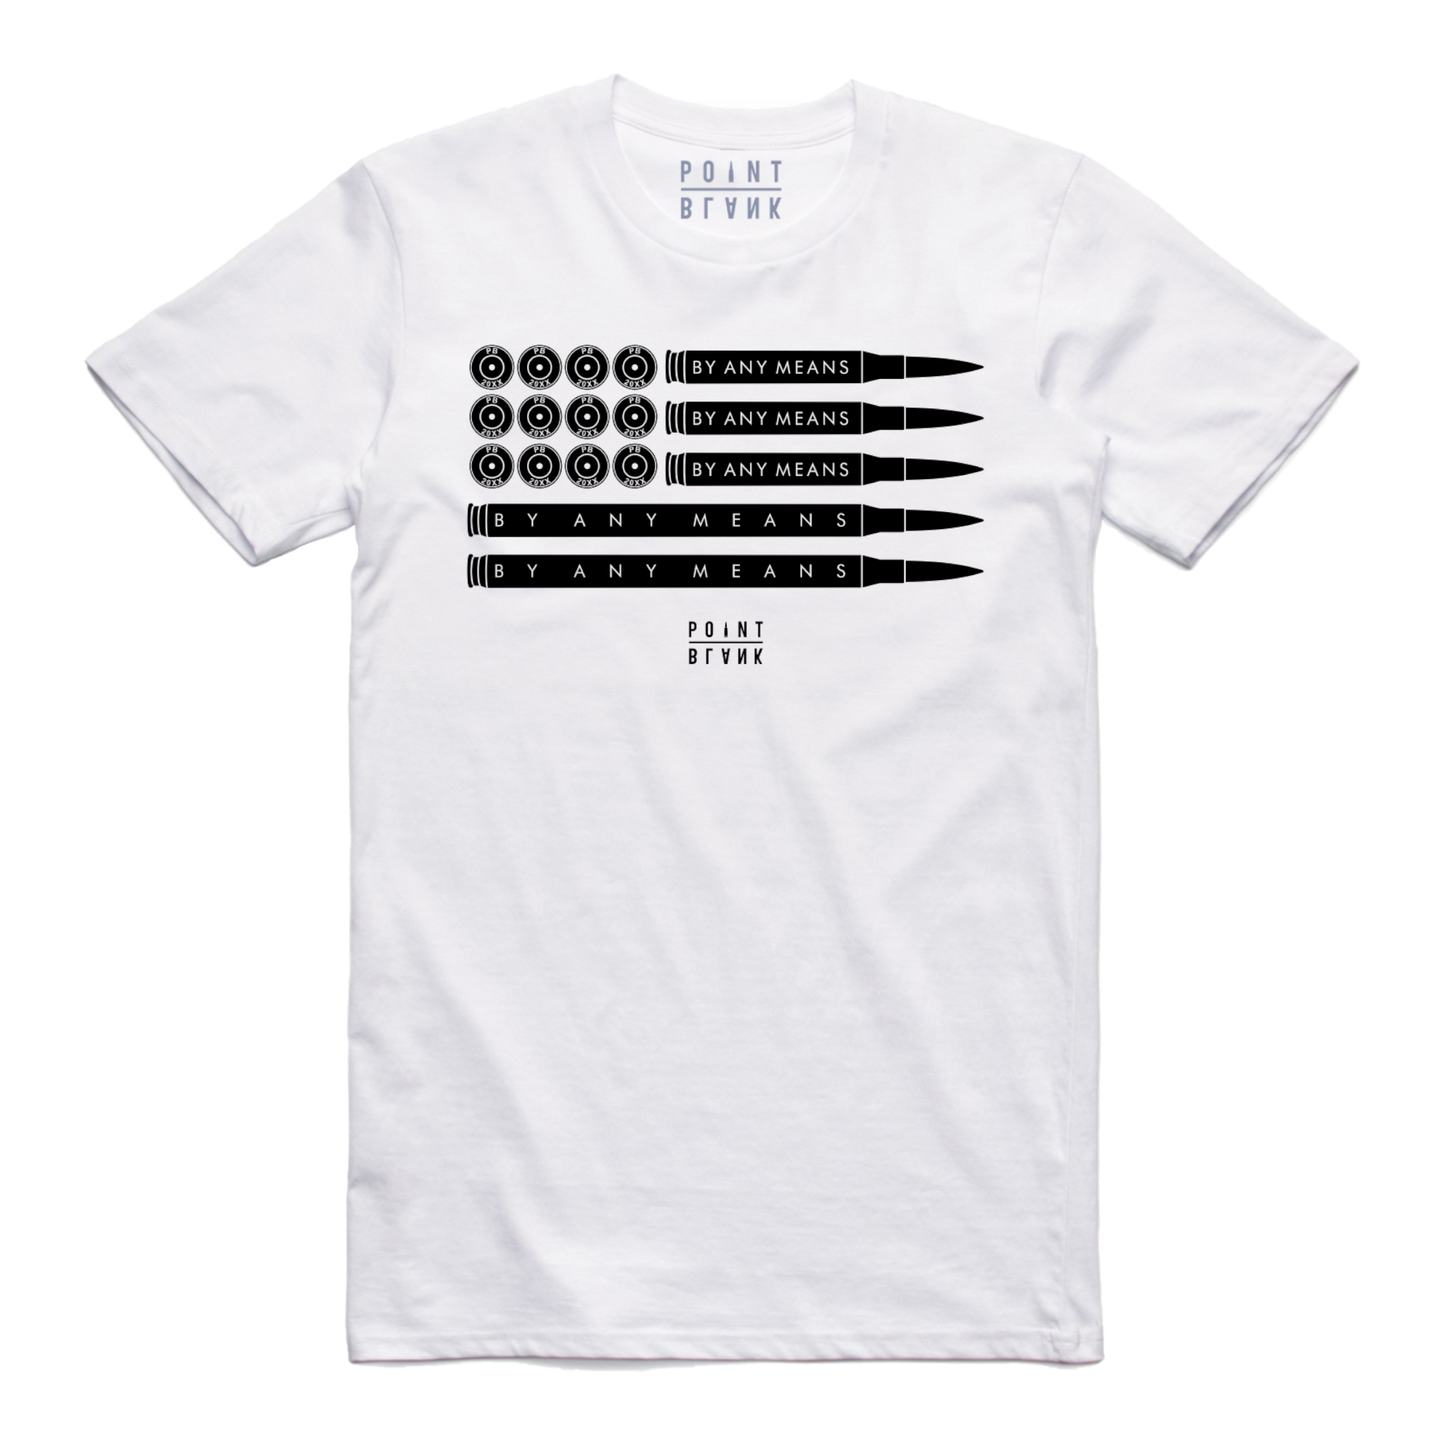 American Flag T-Shirt - White